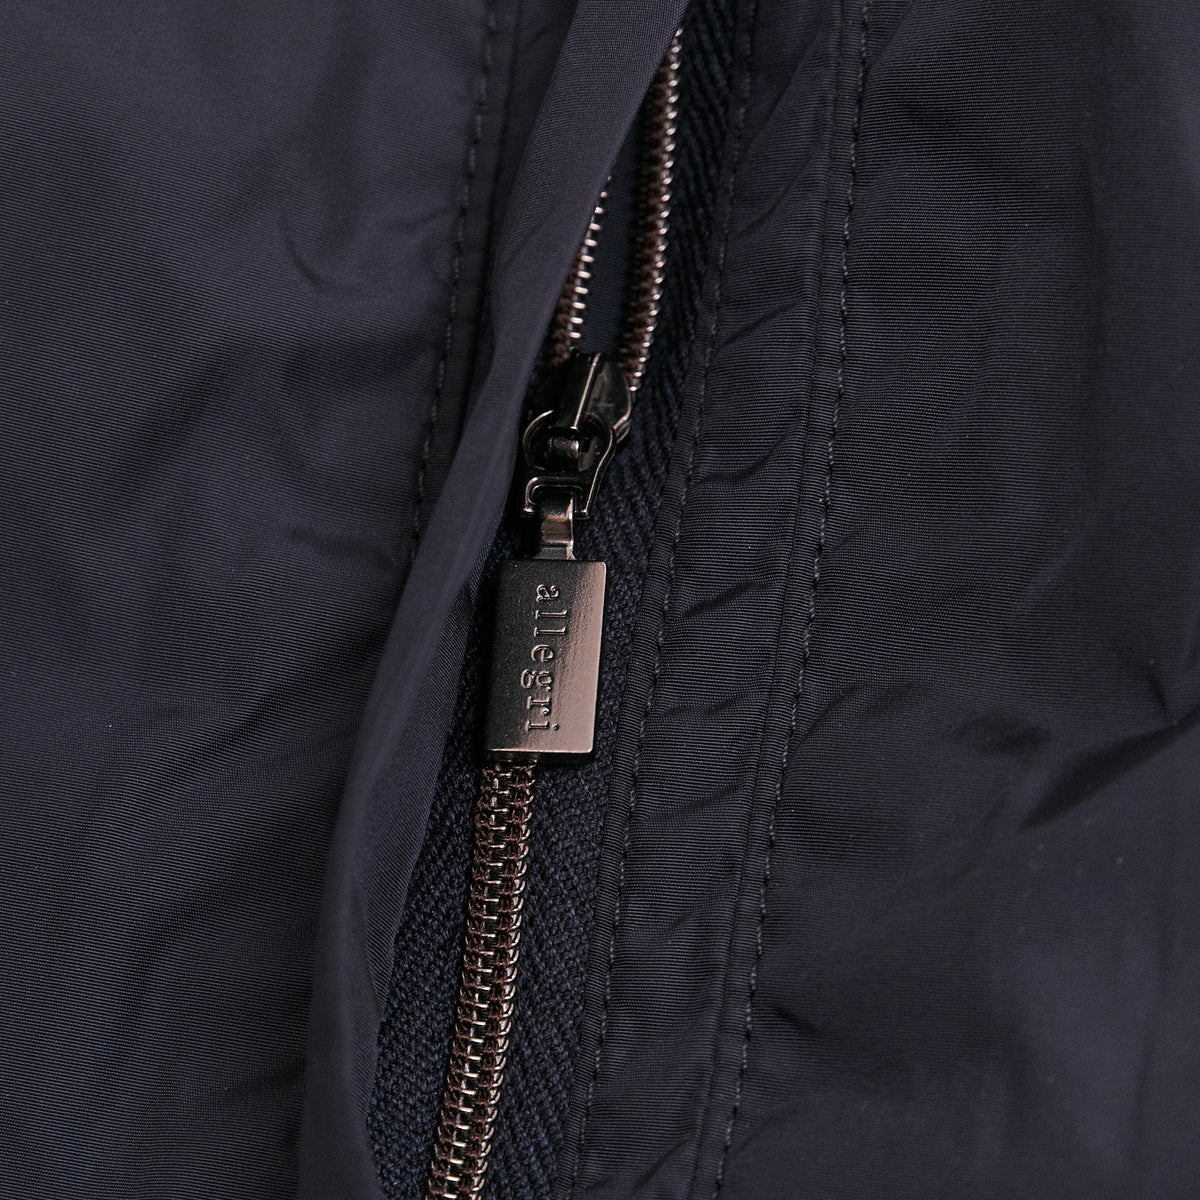 Allegri Italy 80&#39;s Style Sport Jacket A-Tech